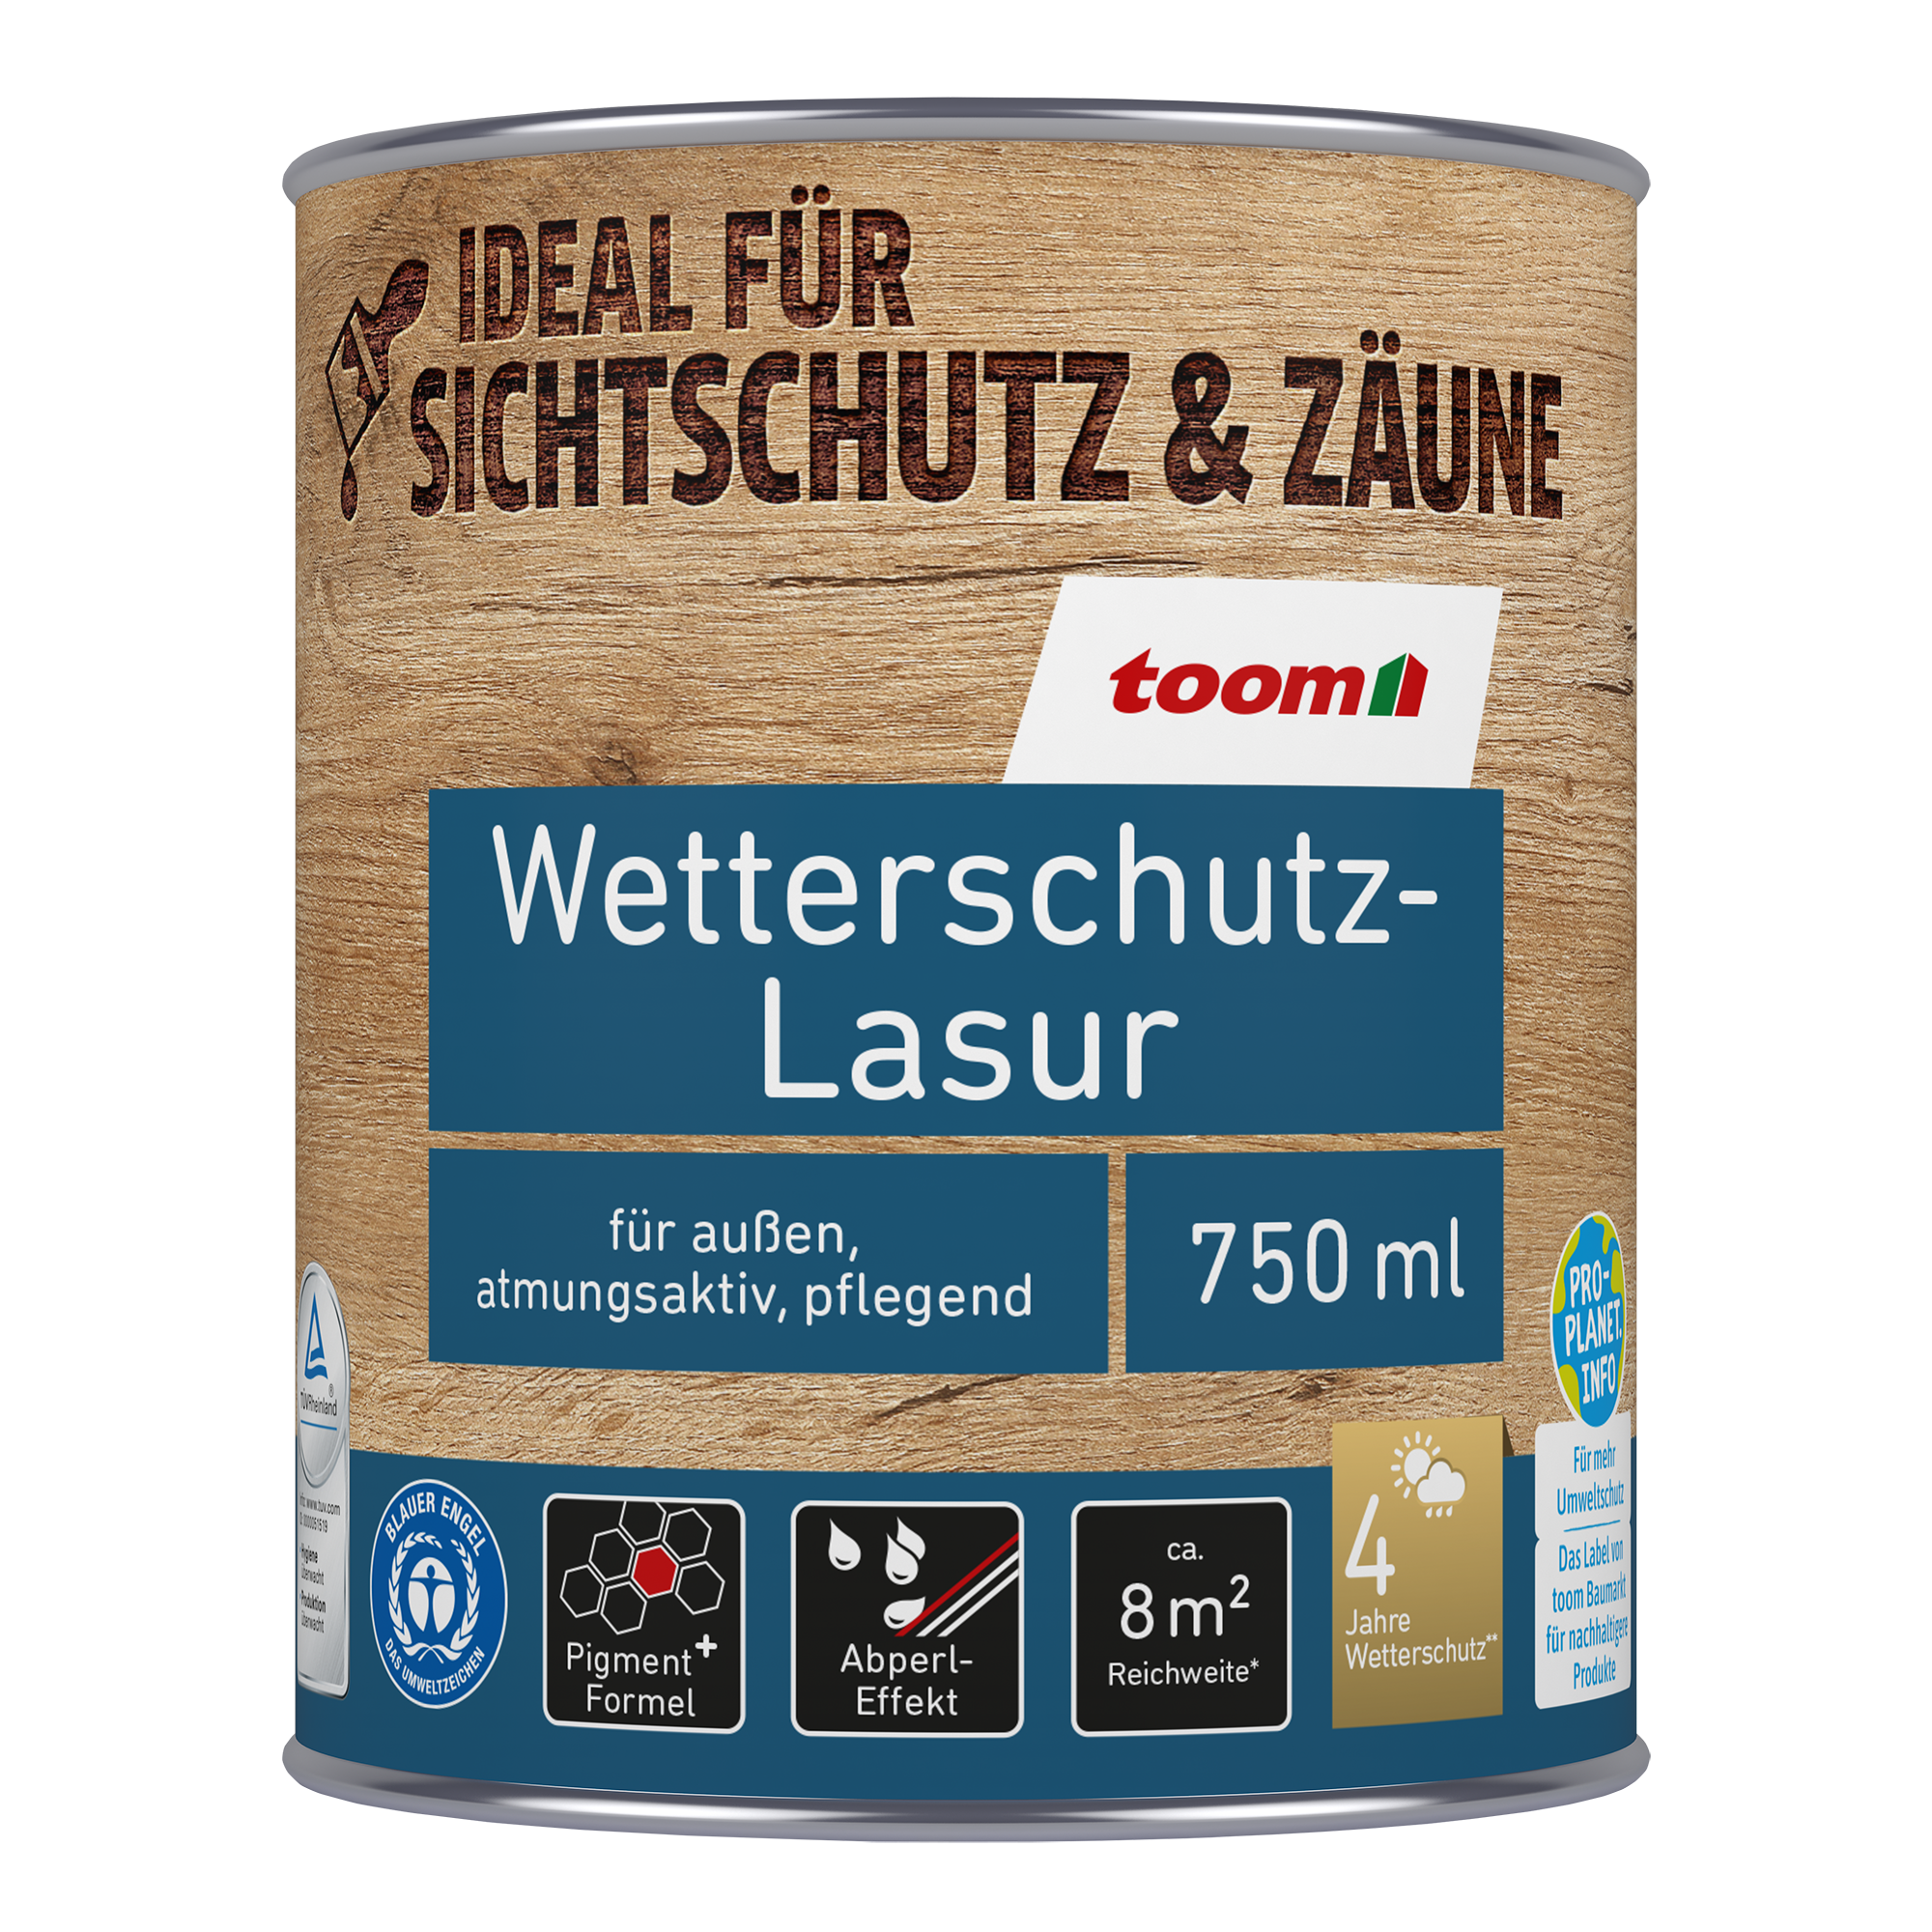 Wetterschutz-Lasur lärchefarben 750 ml + product picture